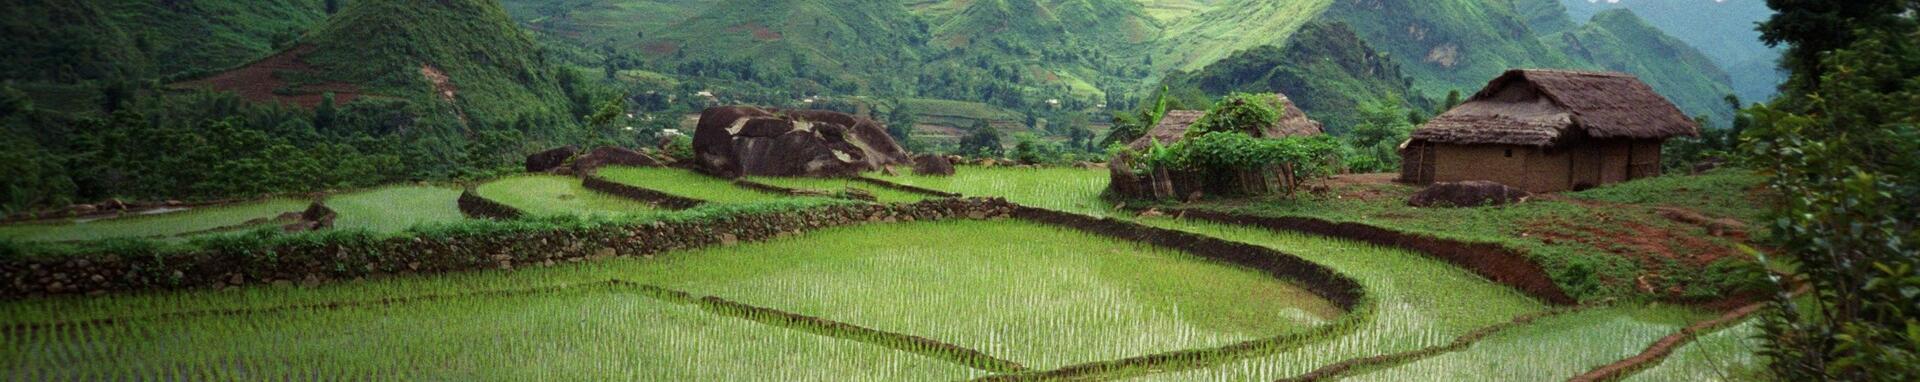 Sustainable land use in mountain region